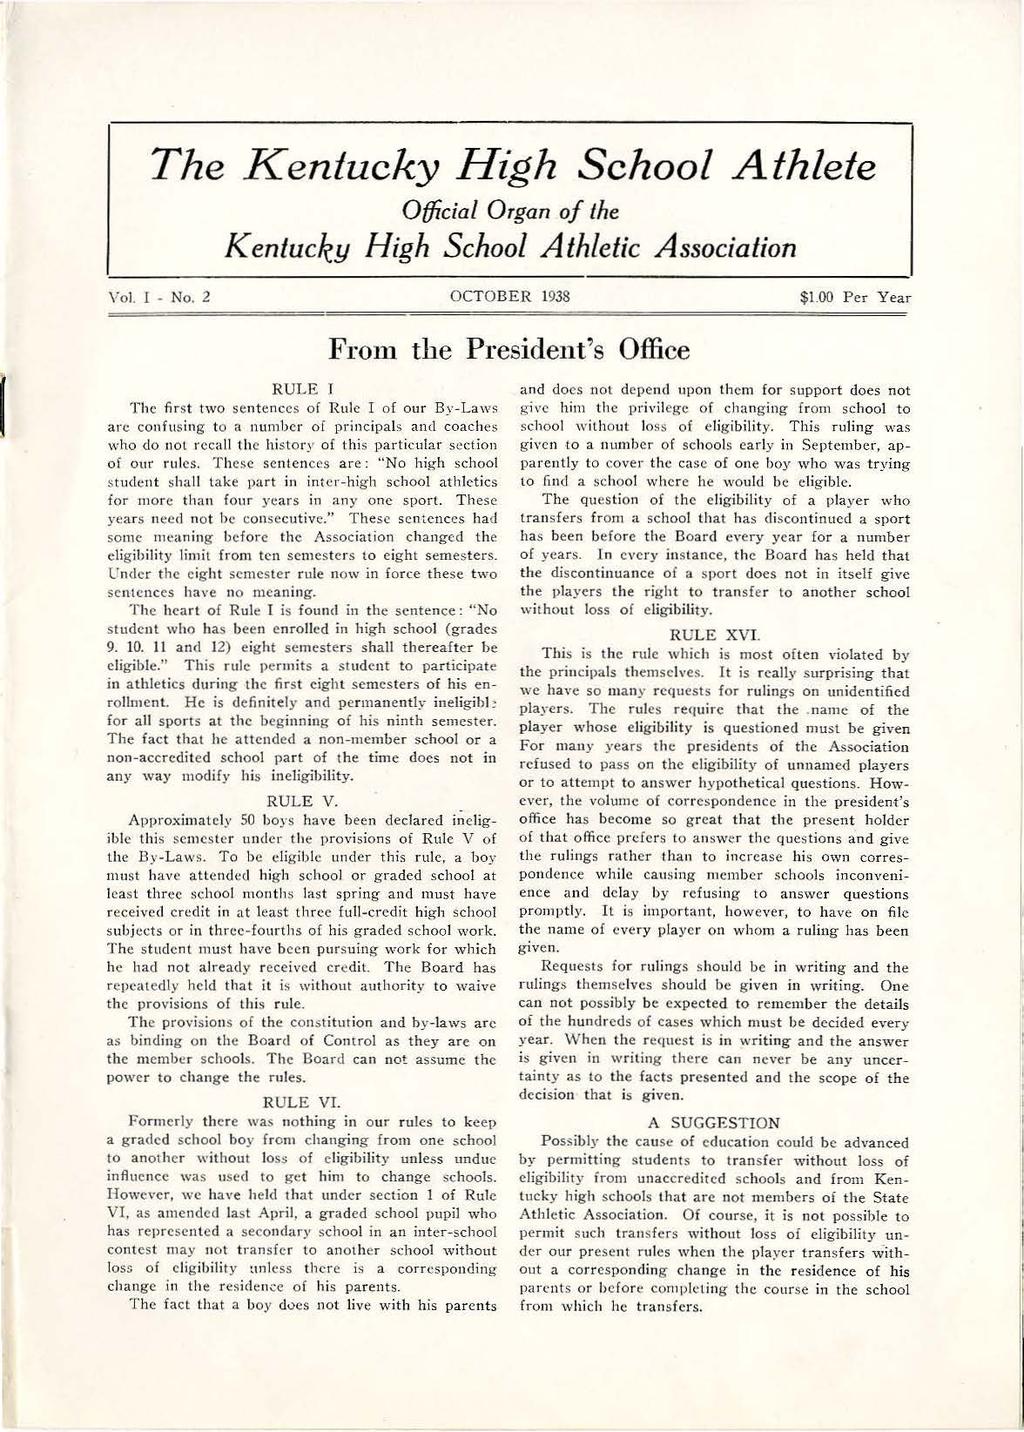 The Kentucky Hgh School Athlete Offcal Organ of the Kentucky Hgh School Athletc Assocaton Vol. - No. 2 OCTOBER 938 $.